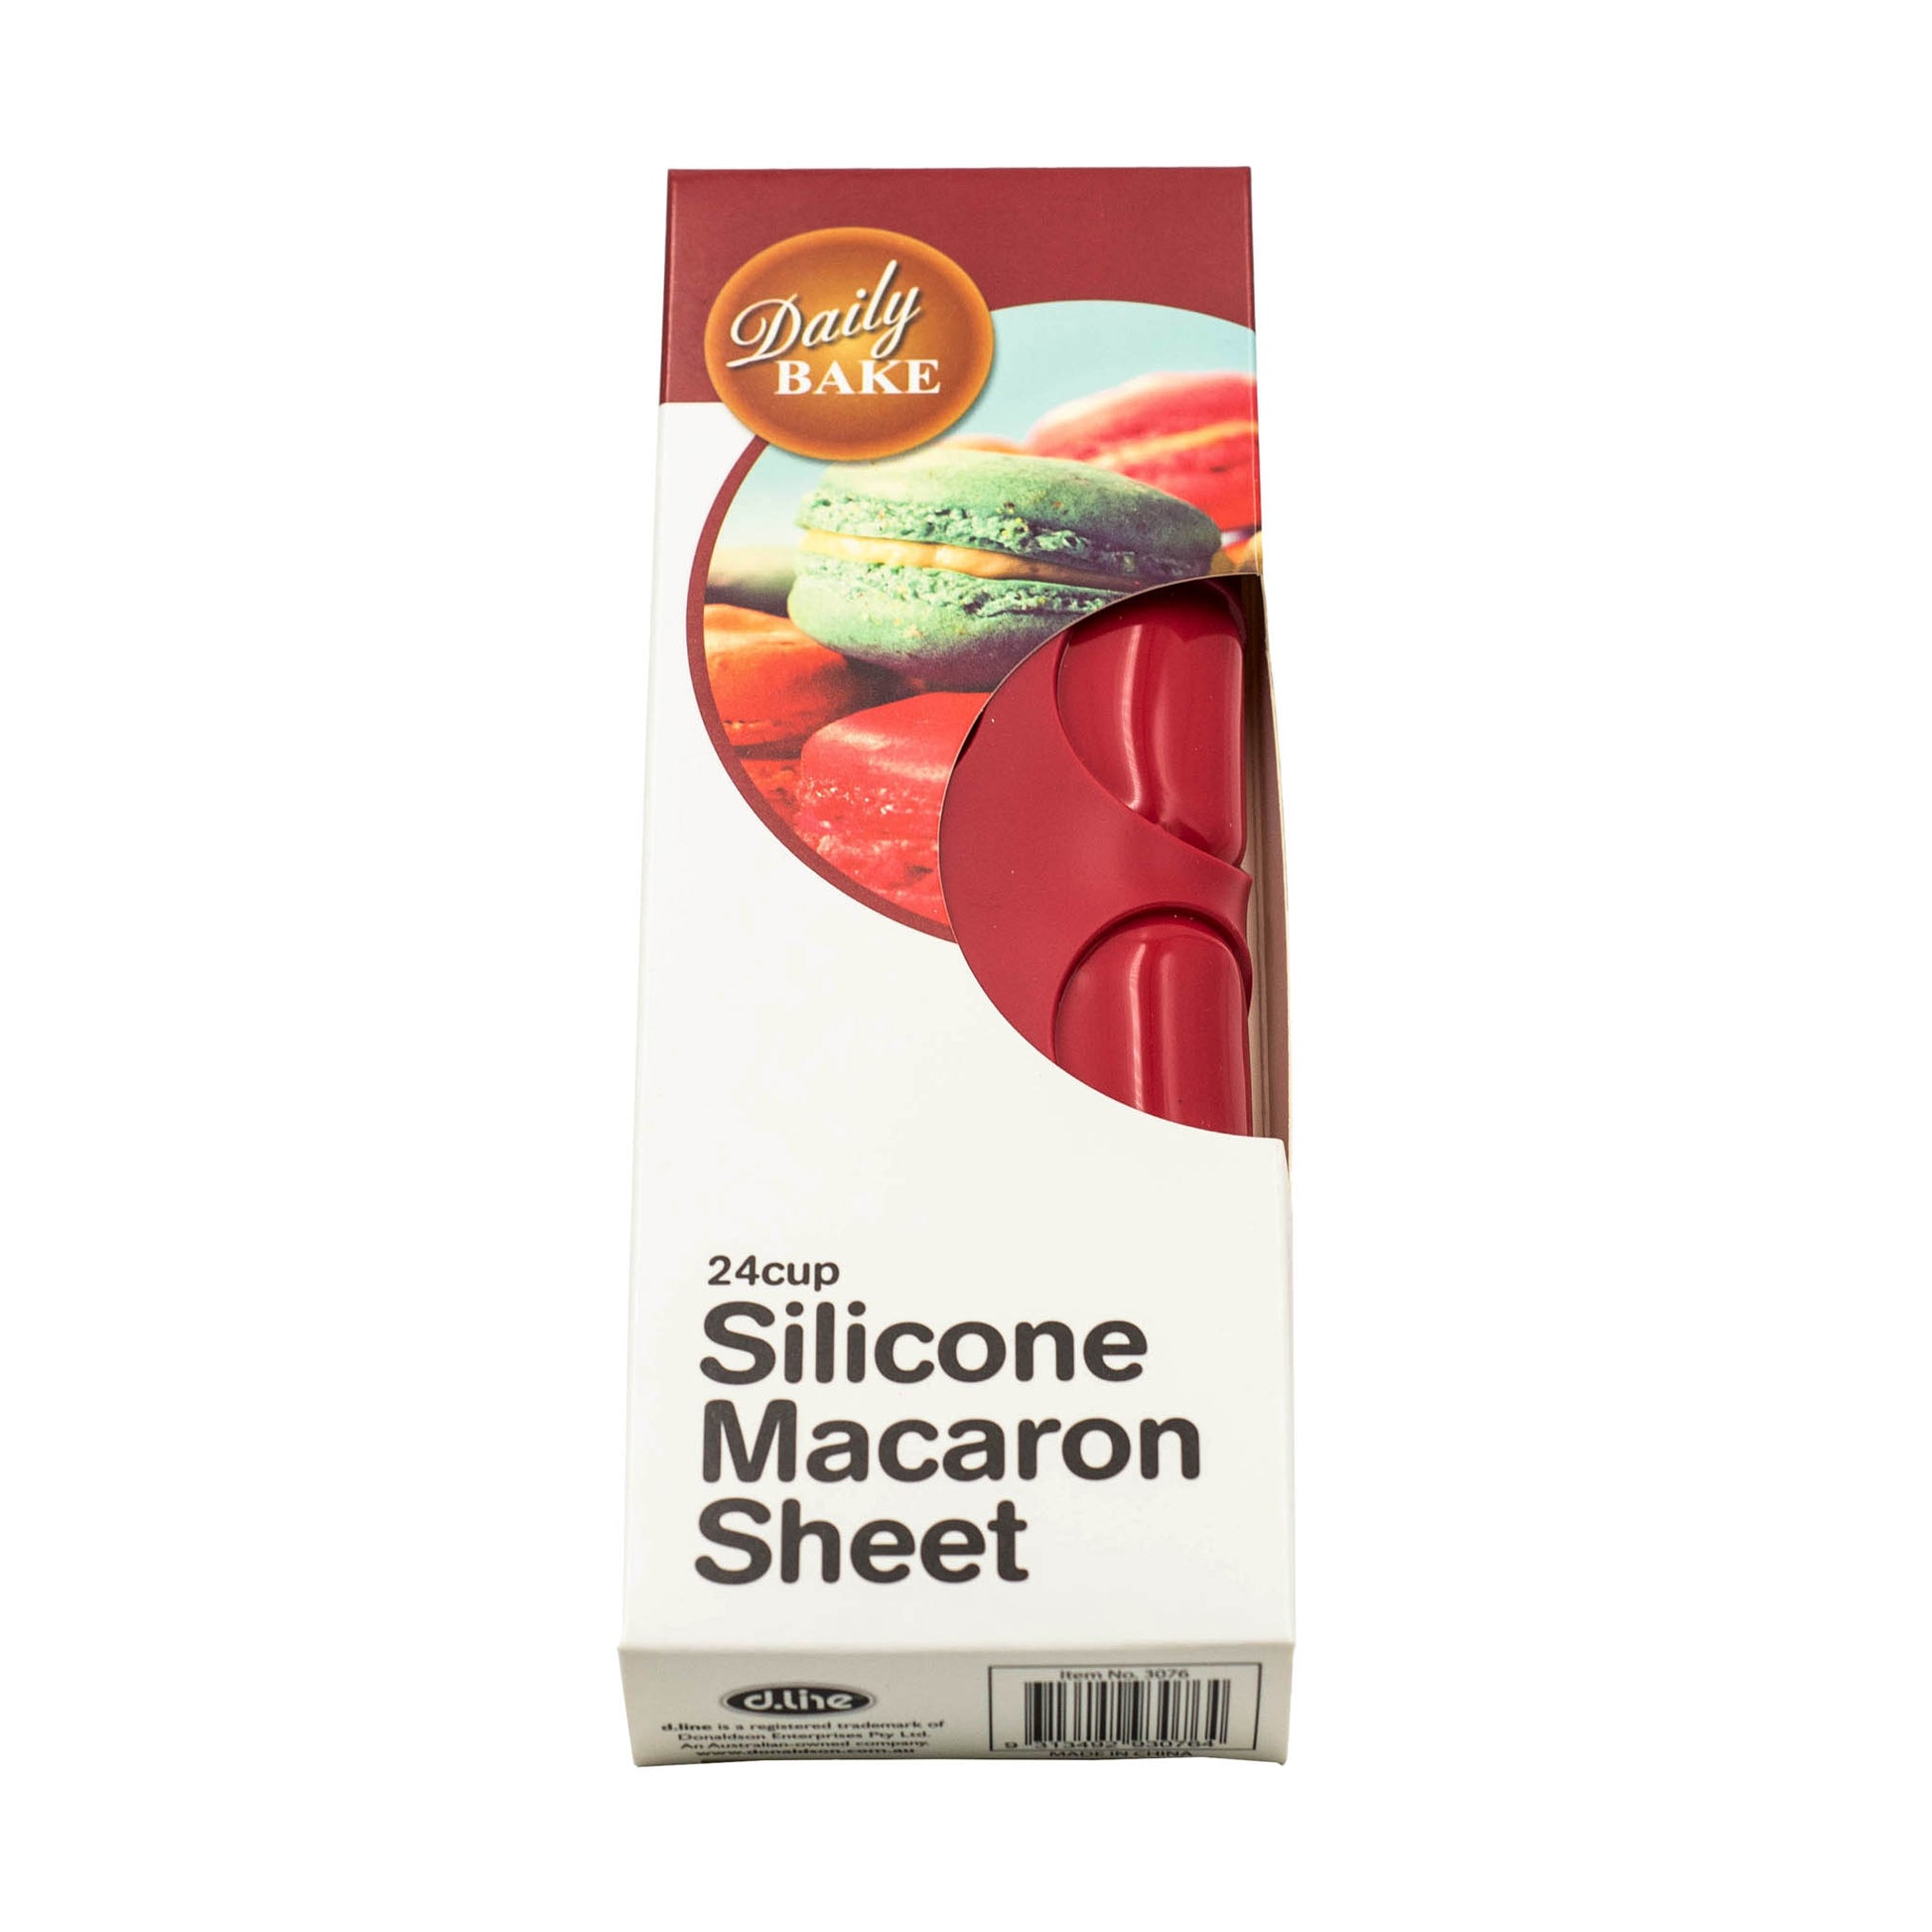 Silicone macaron baking sheet 24 cup. BPA free, food grade silicone. 